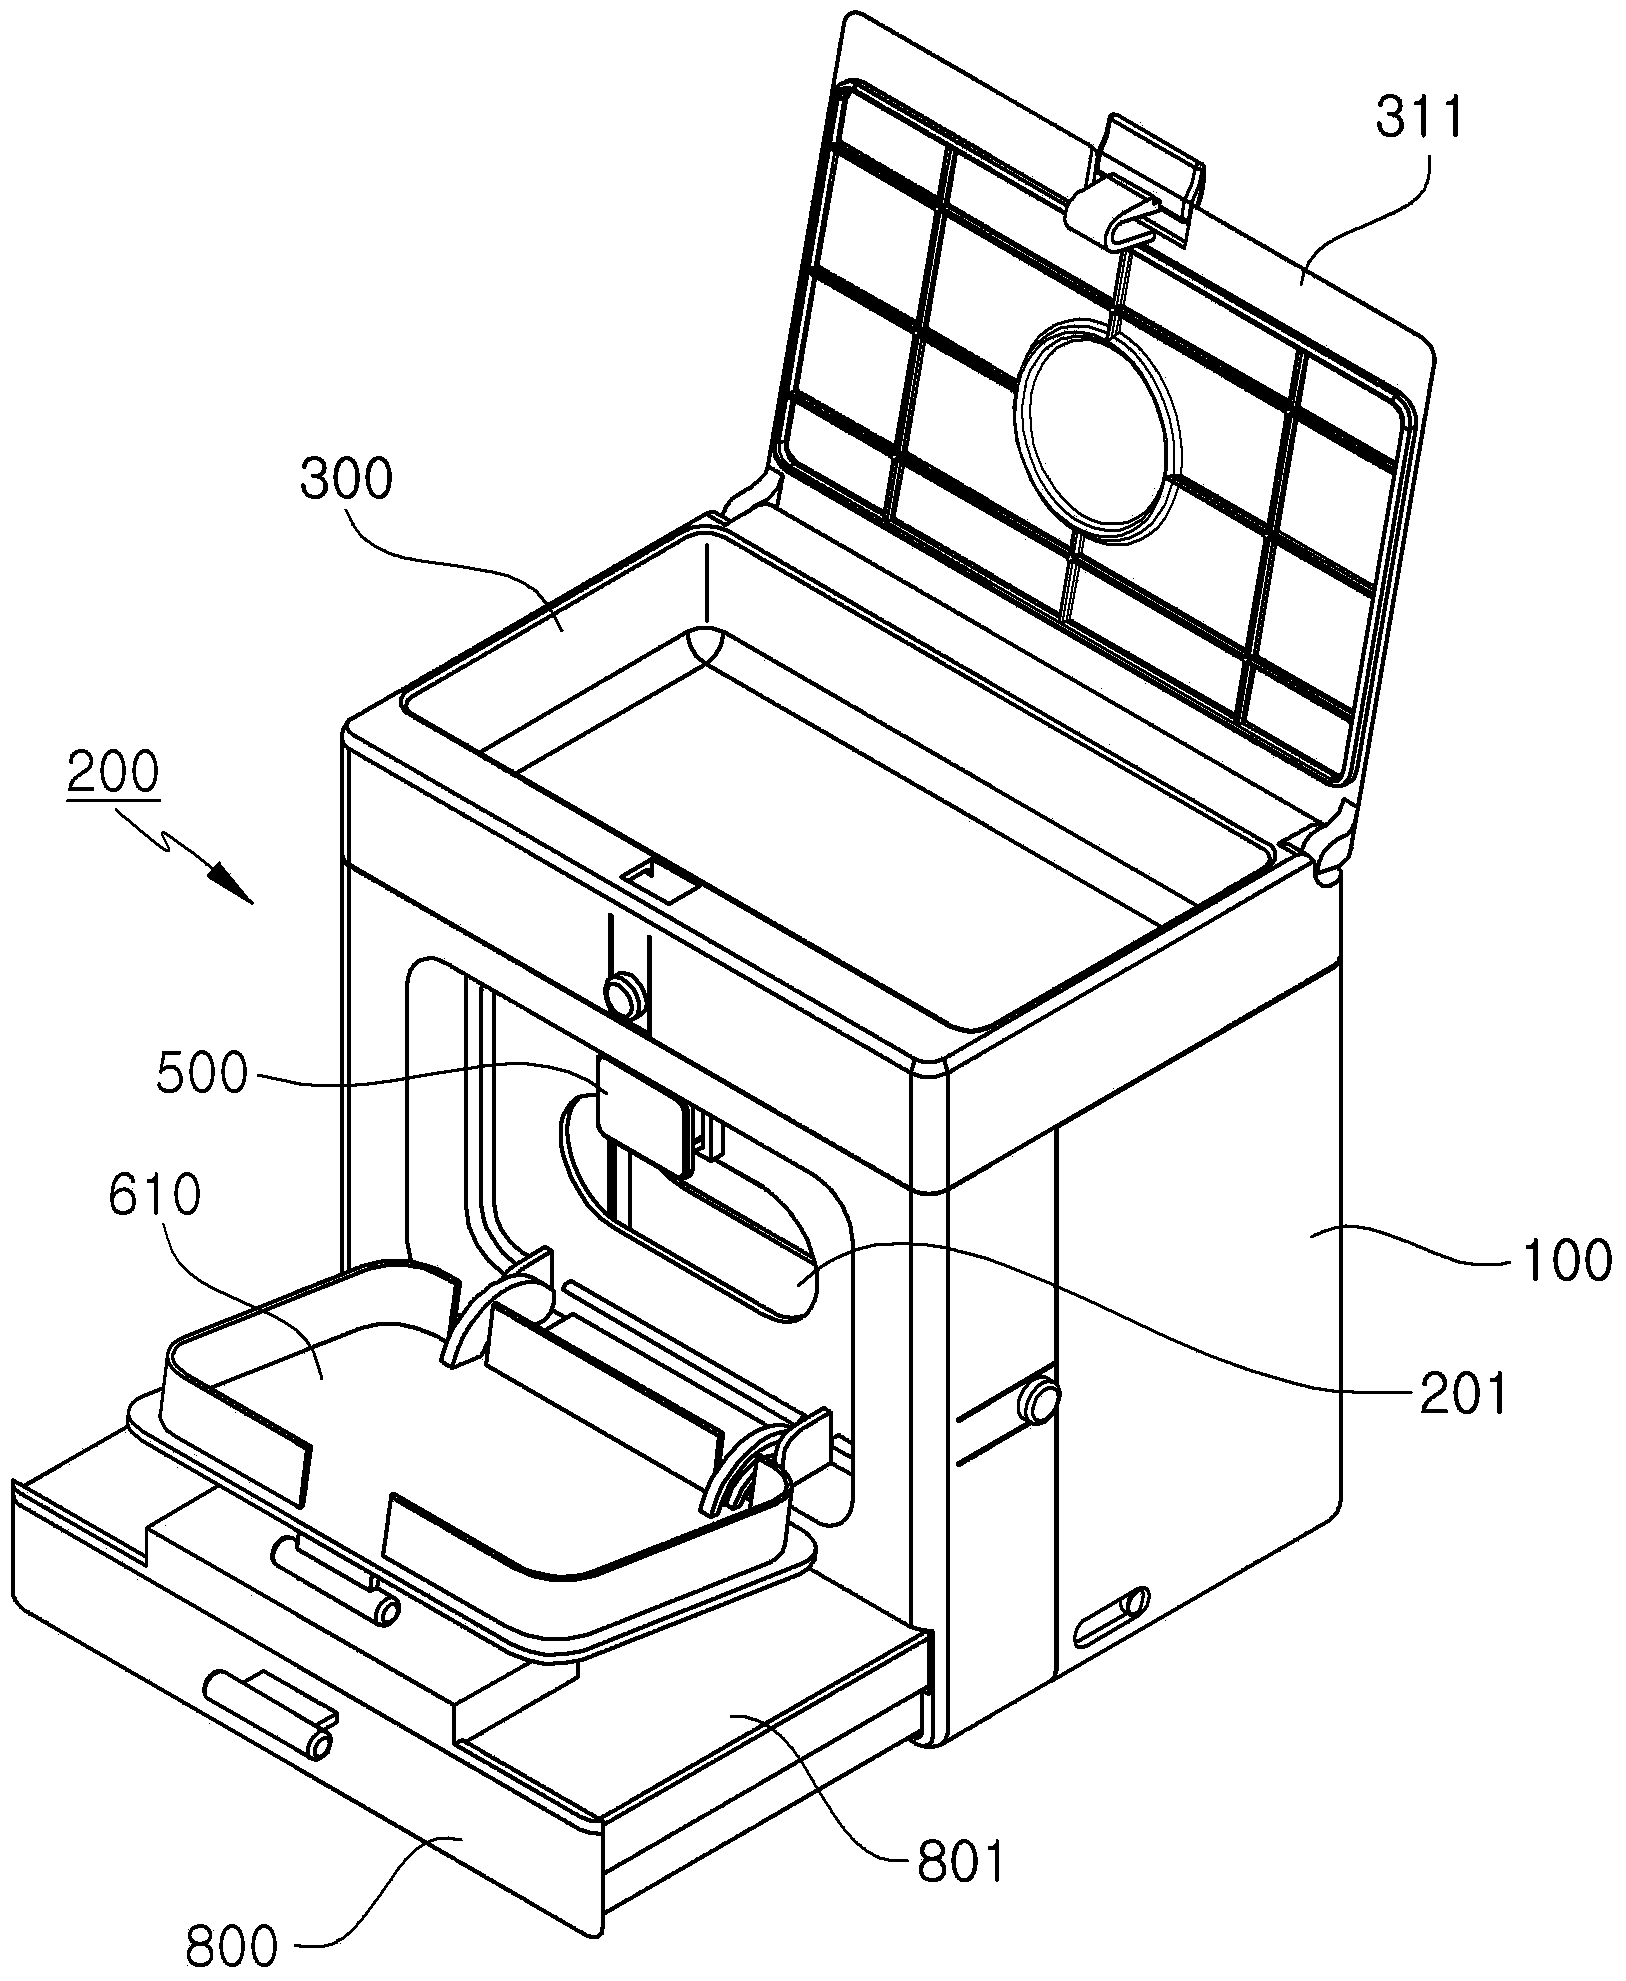 Wet tissue supply apparatus